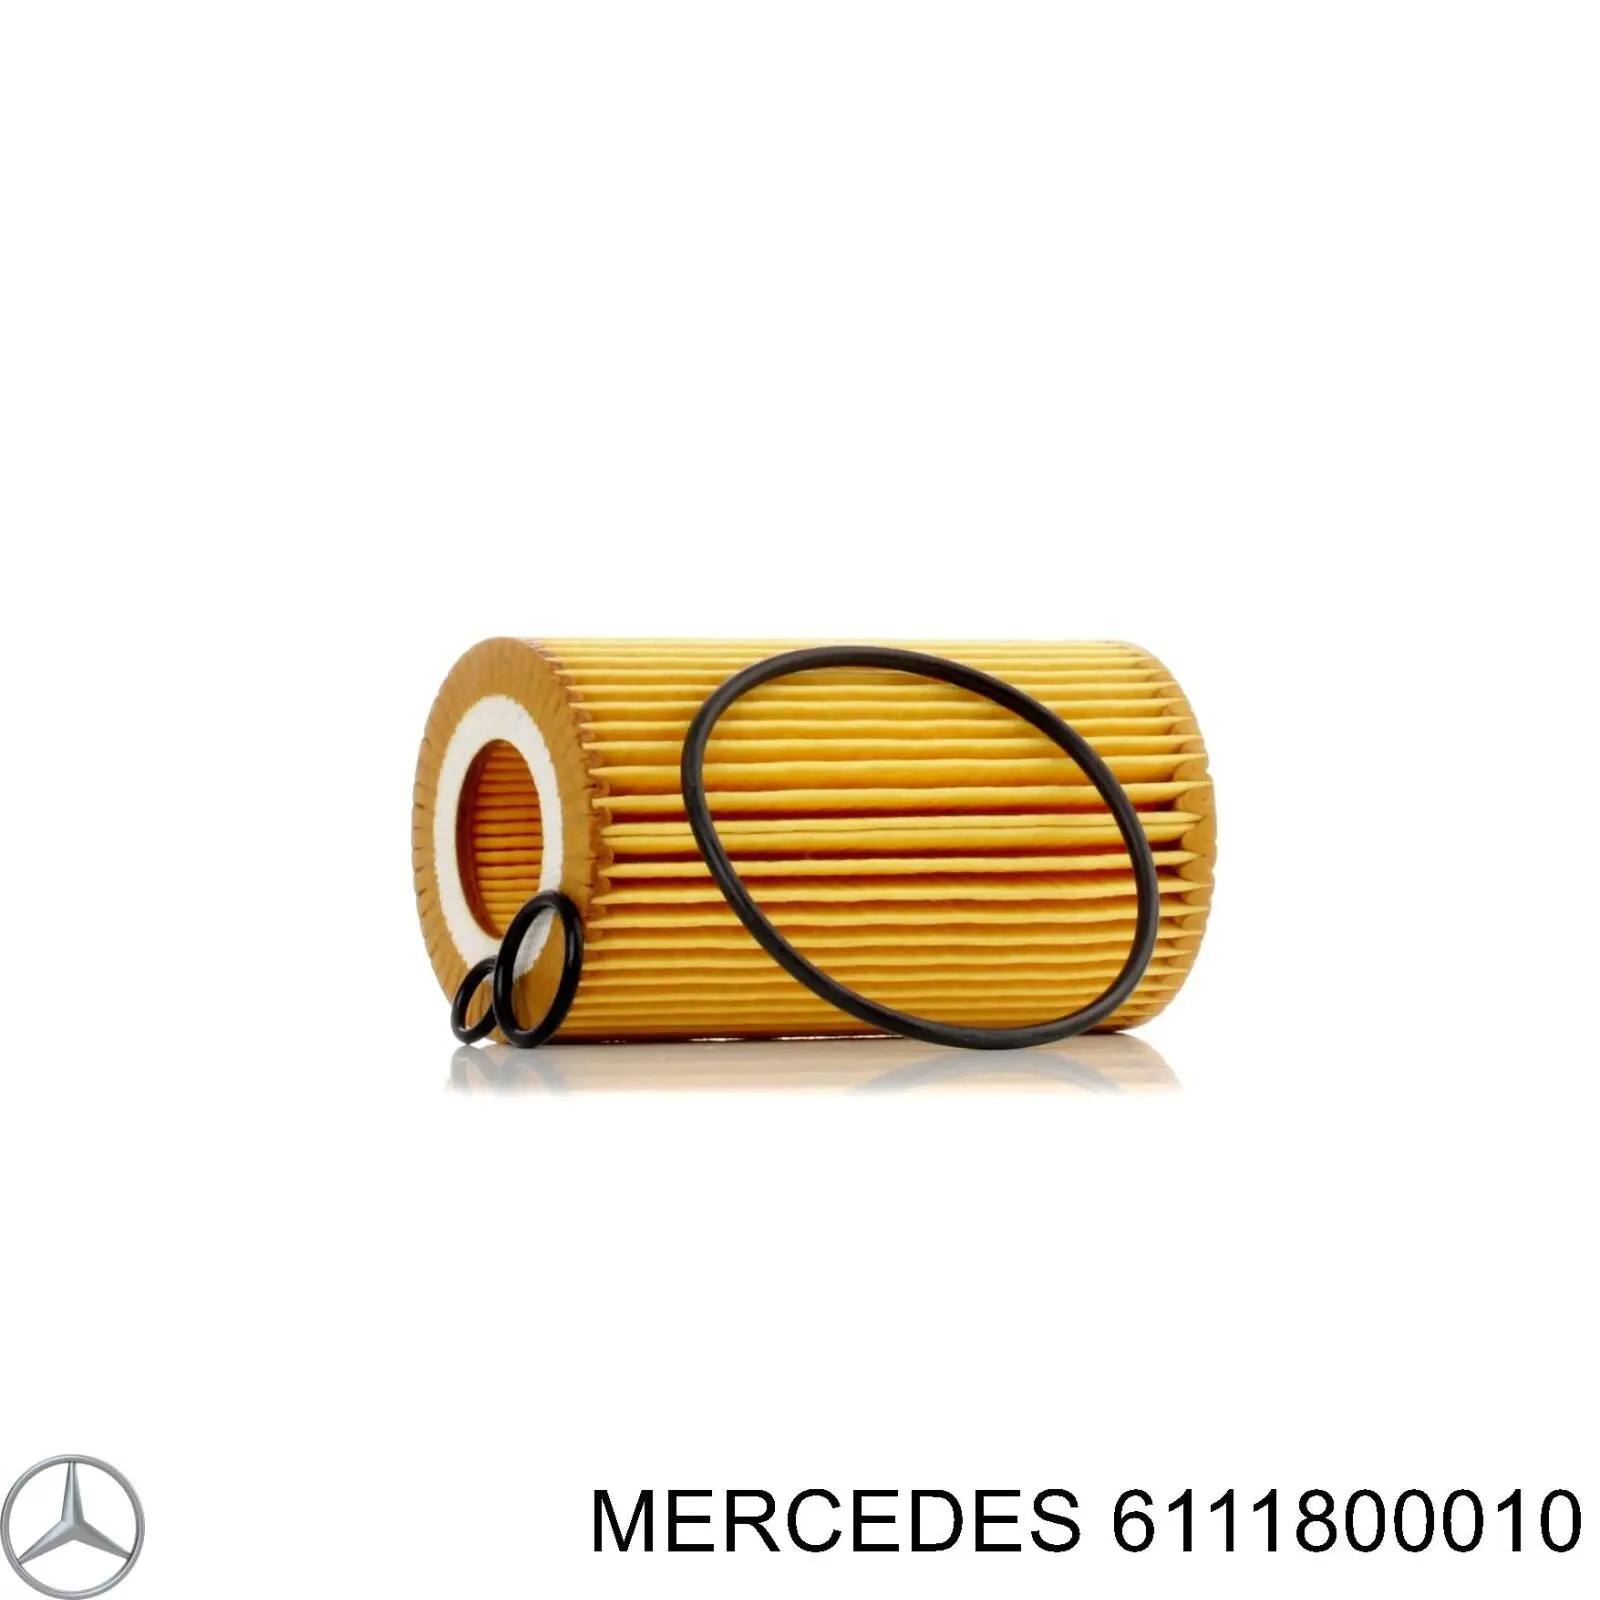 6111800010 Mercedes tampa do filtro de óleo